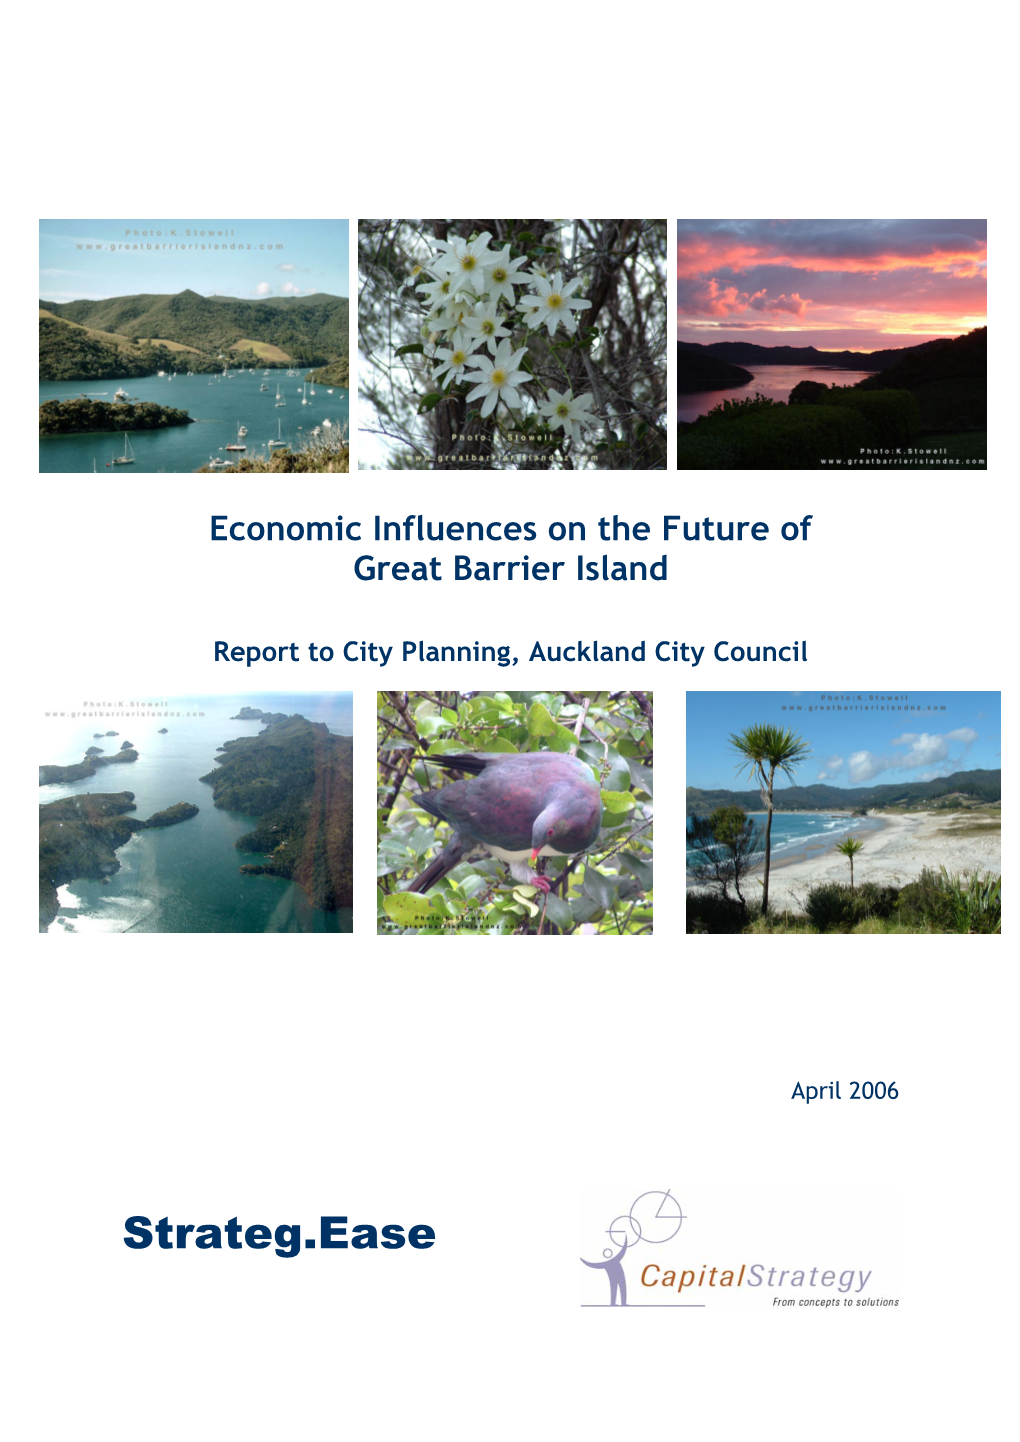 Economic Influence (Great Barrier Island)